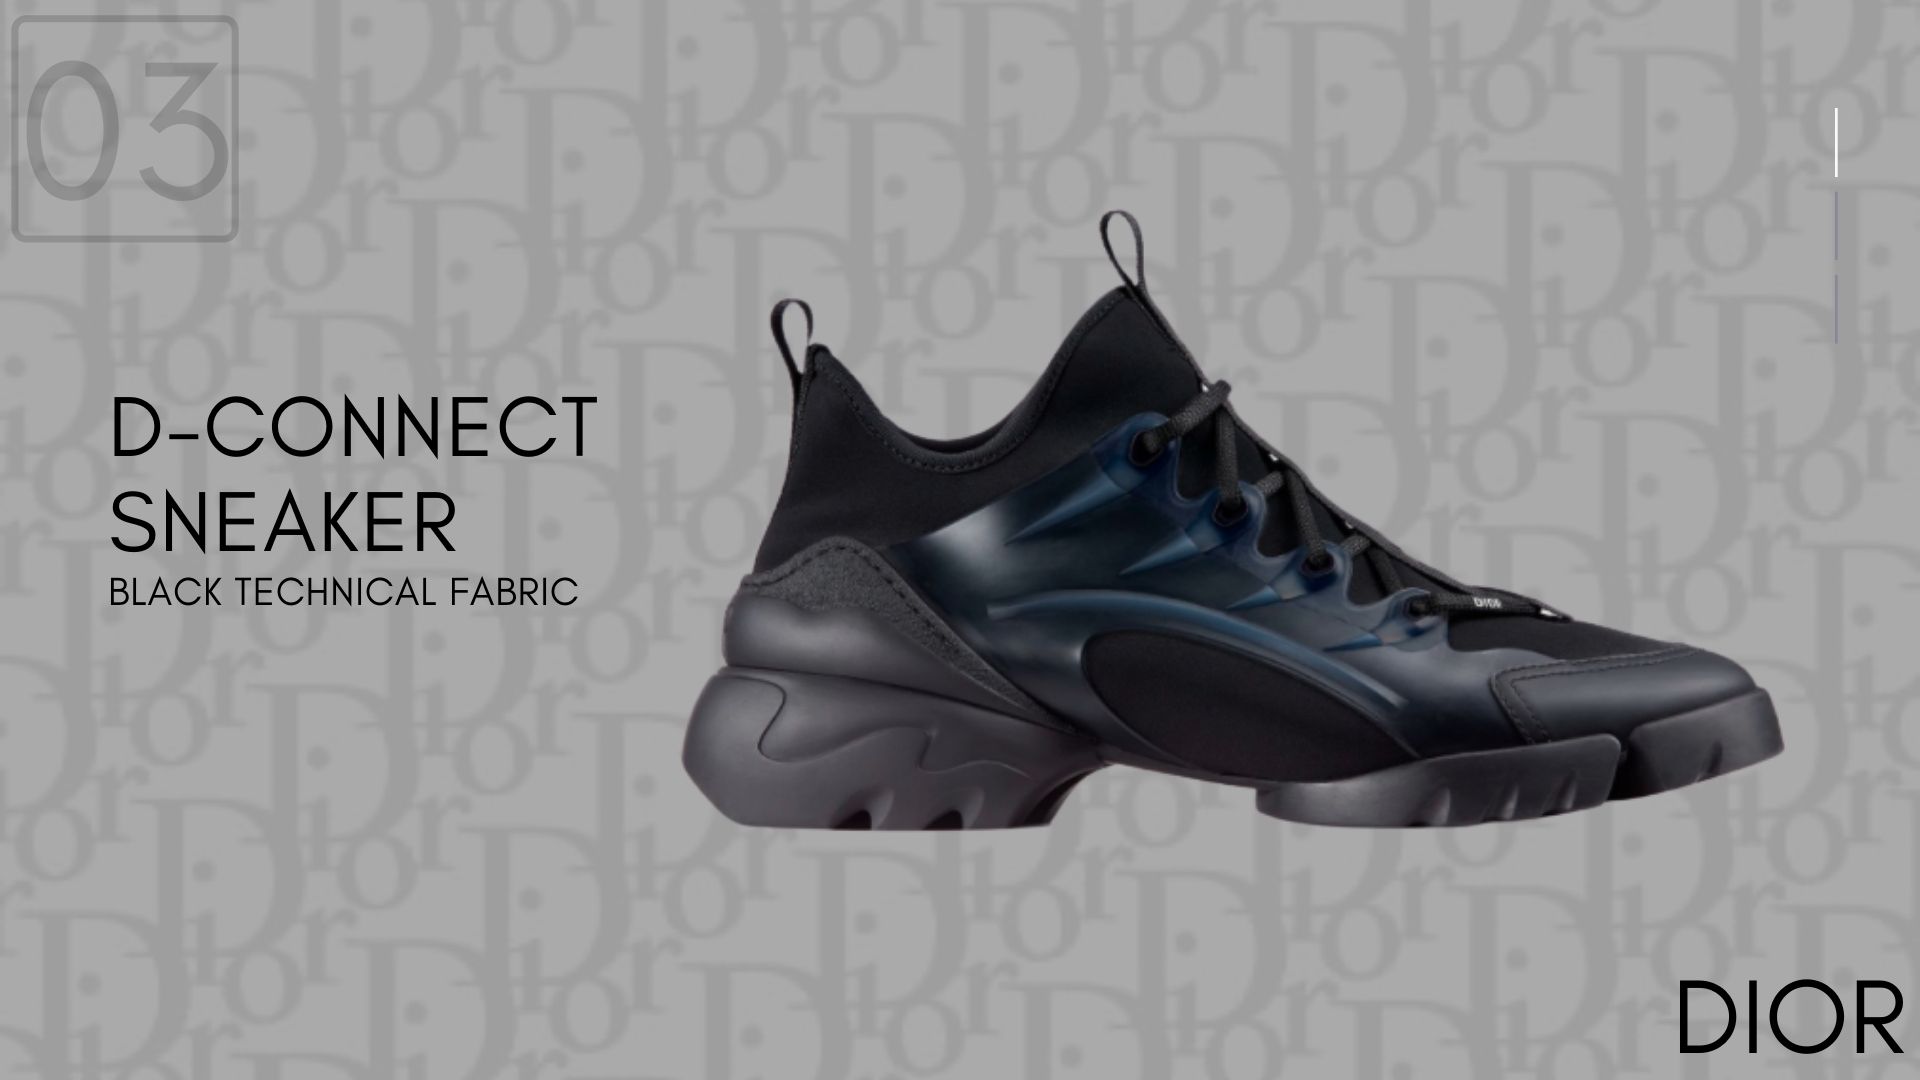 D-CONNECT Black Technical Fabric-Dior Sneakers-รองเท้าดิออร์-10 dior sneakers-dior 10 sneakers